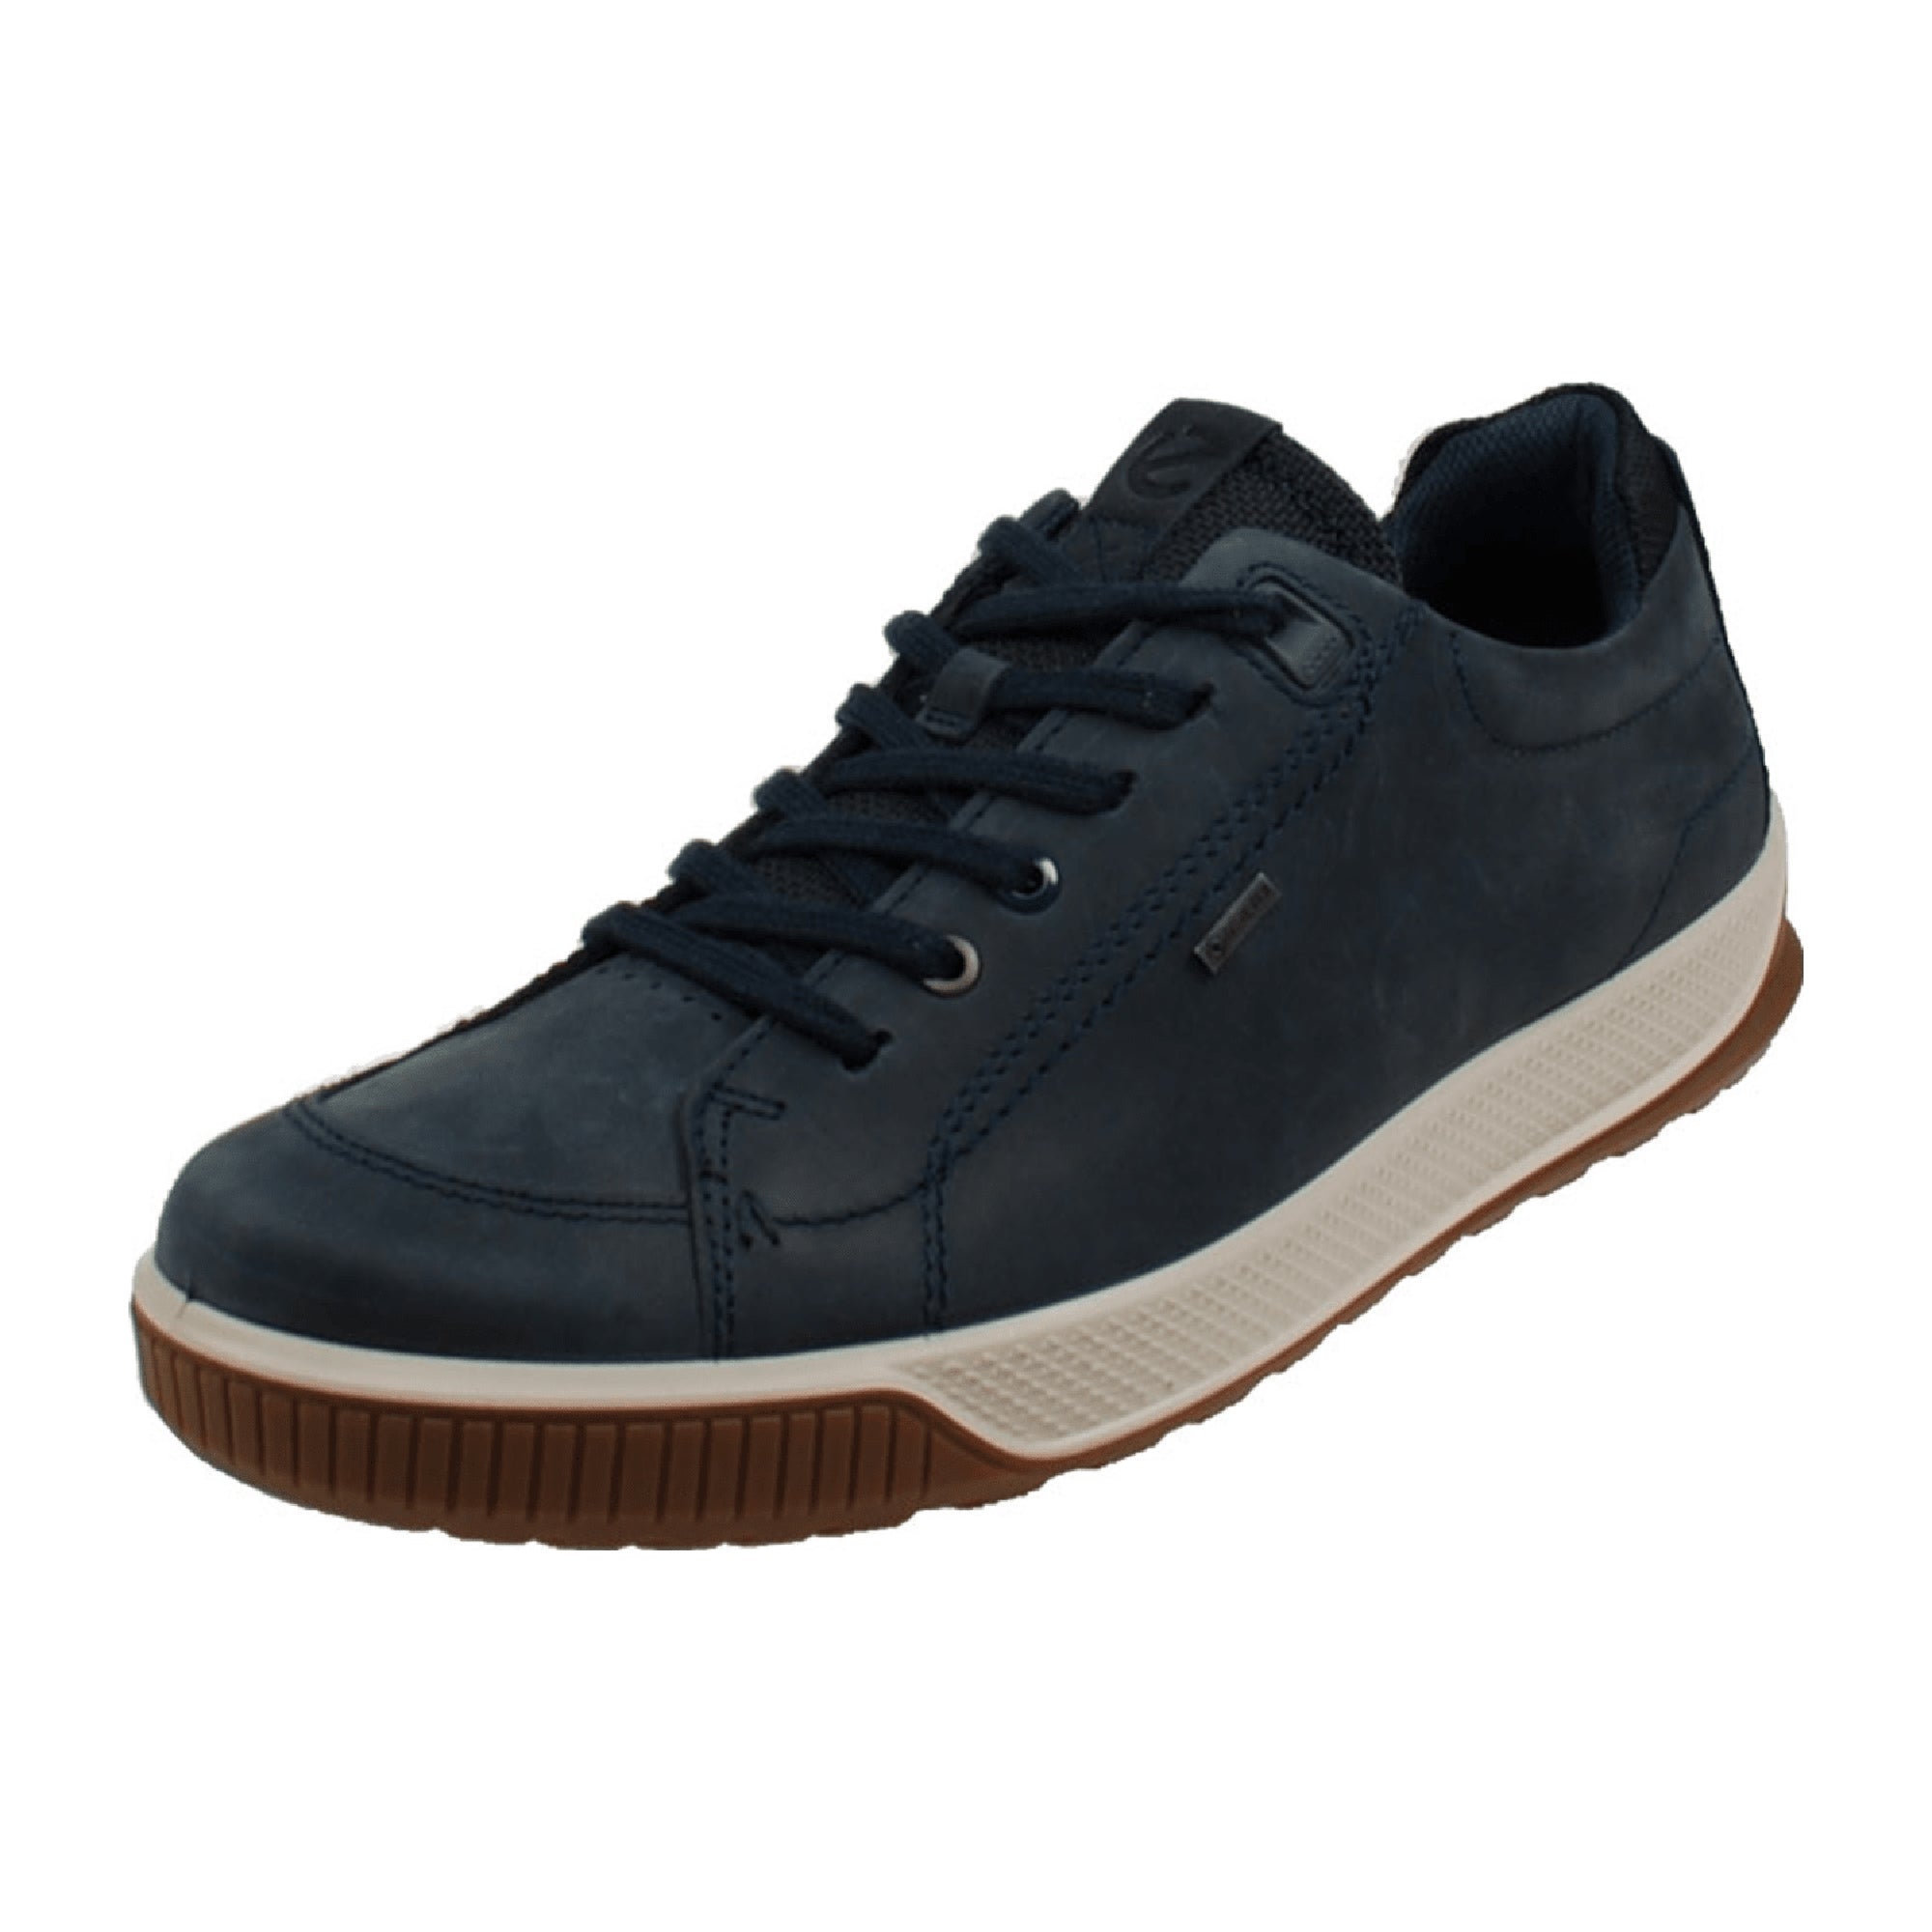 Ecco BYWAY TRED Men's Sneakers, Waterproof Blue Leather